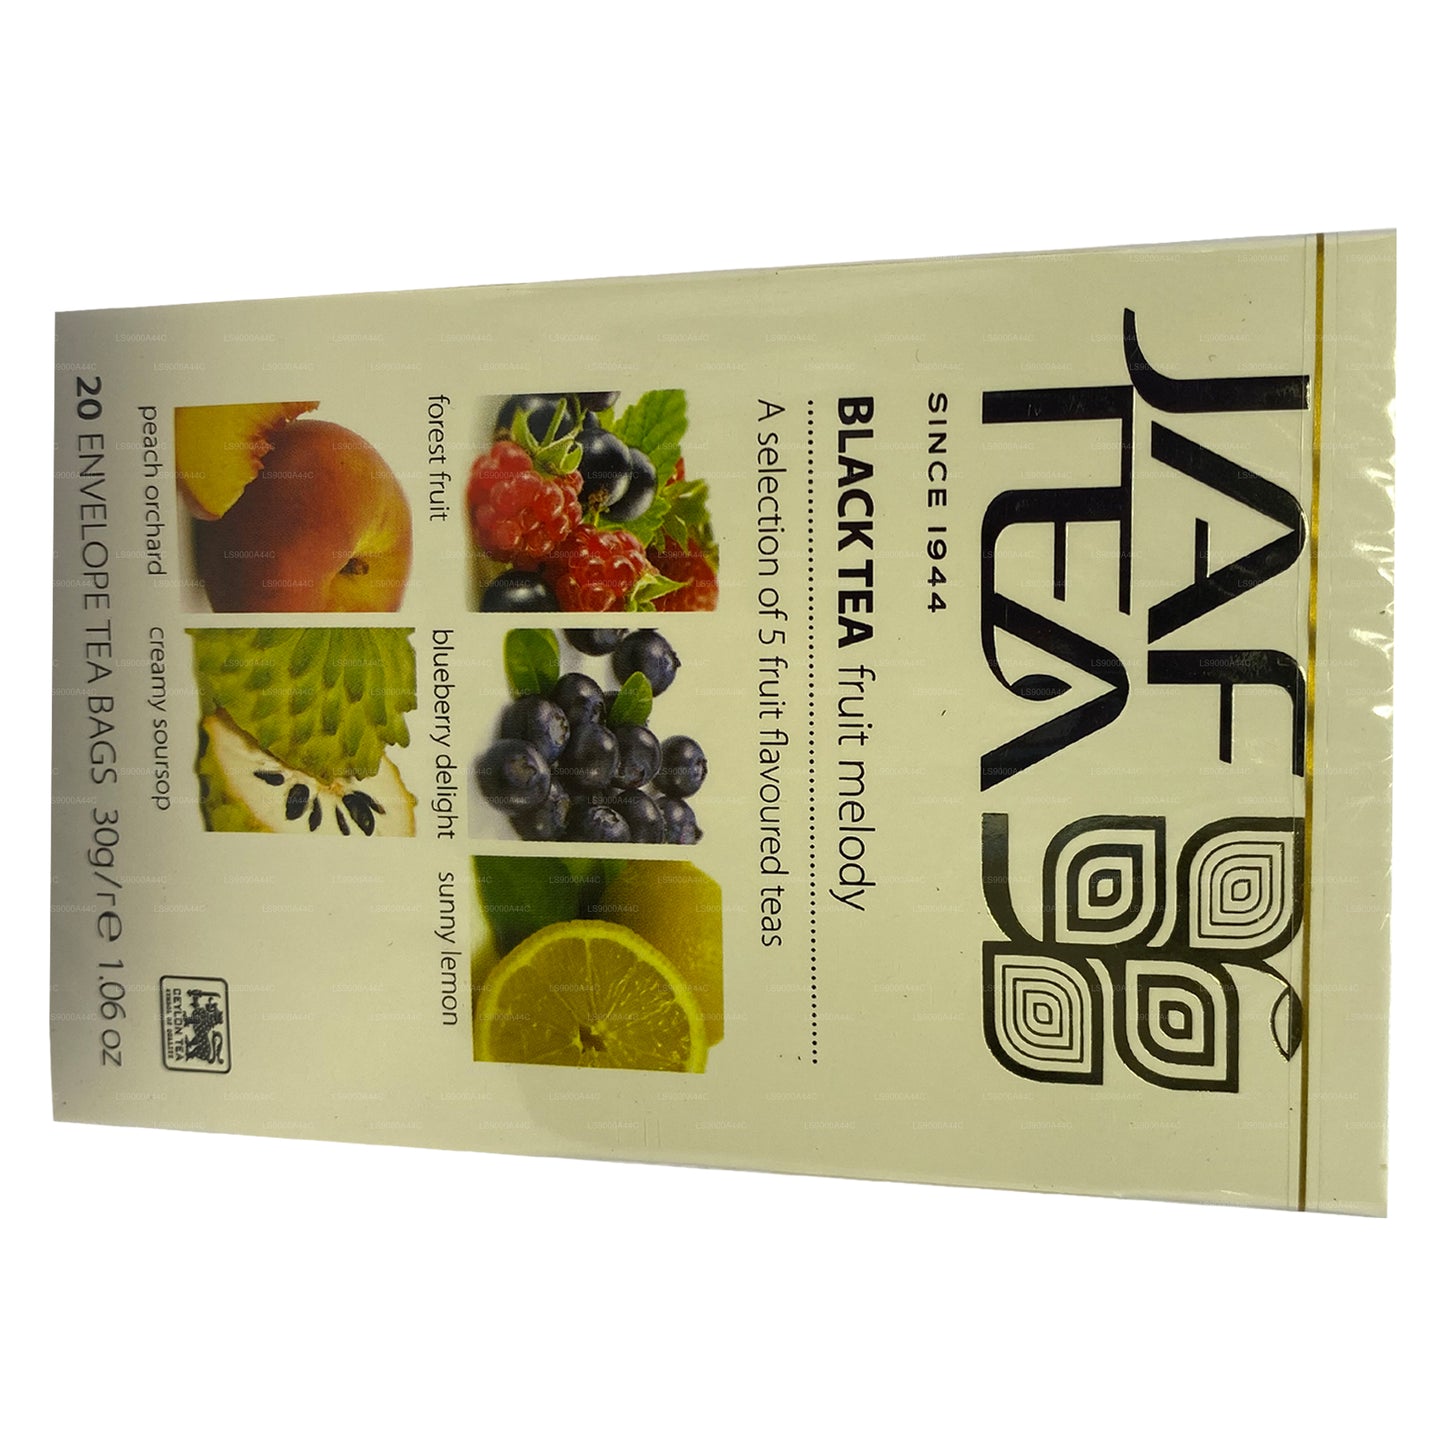 Jaf Tea Pure Fruits Collection Black Tea Fruit Melody (30g) 20 tee kotid